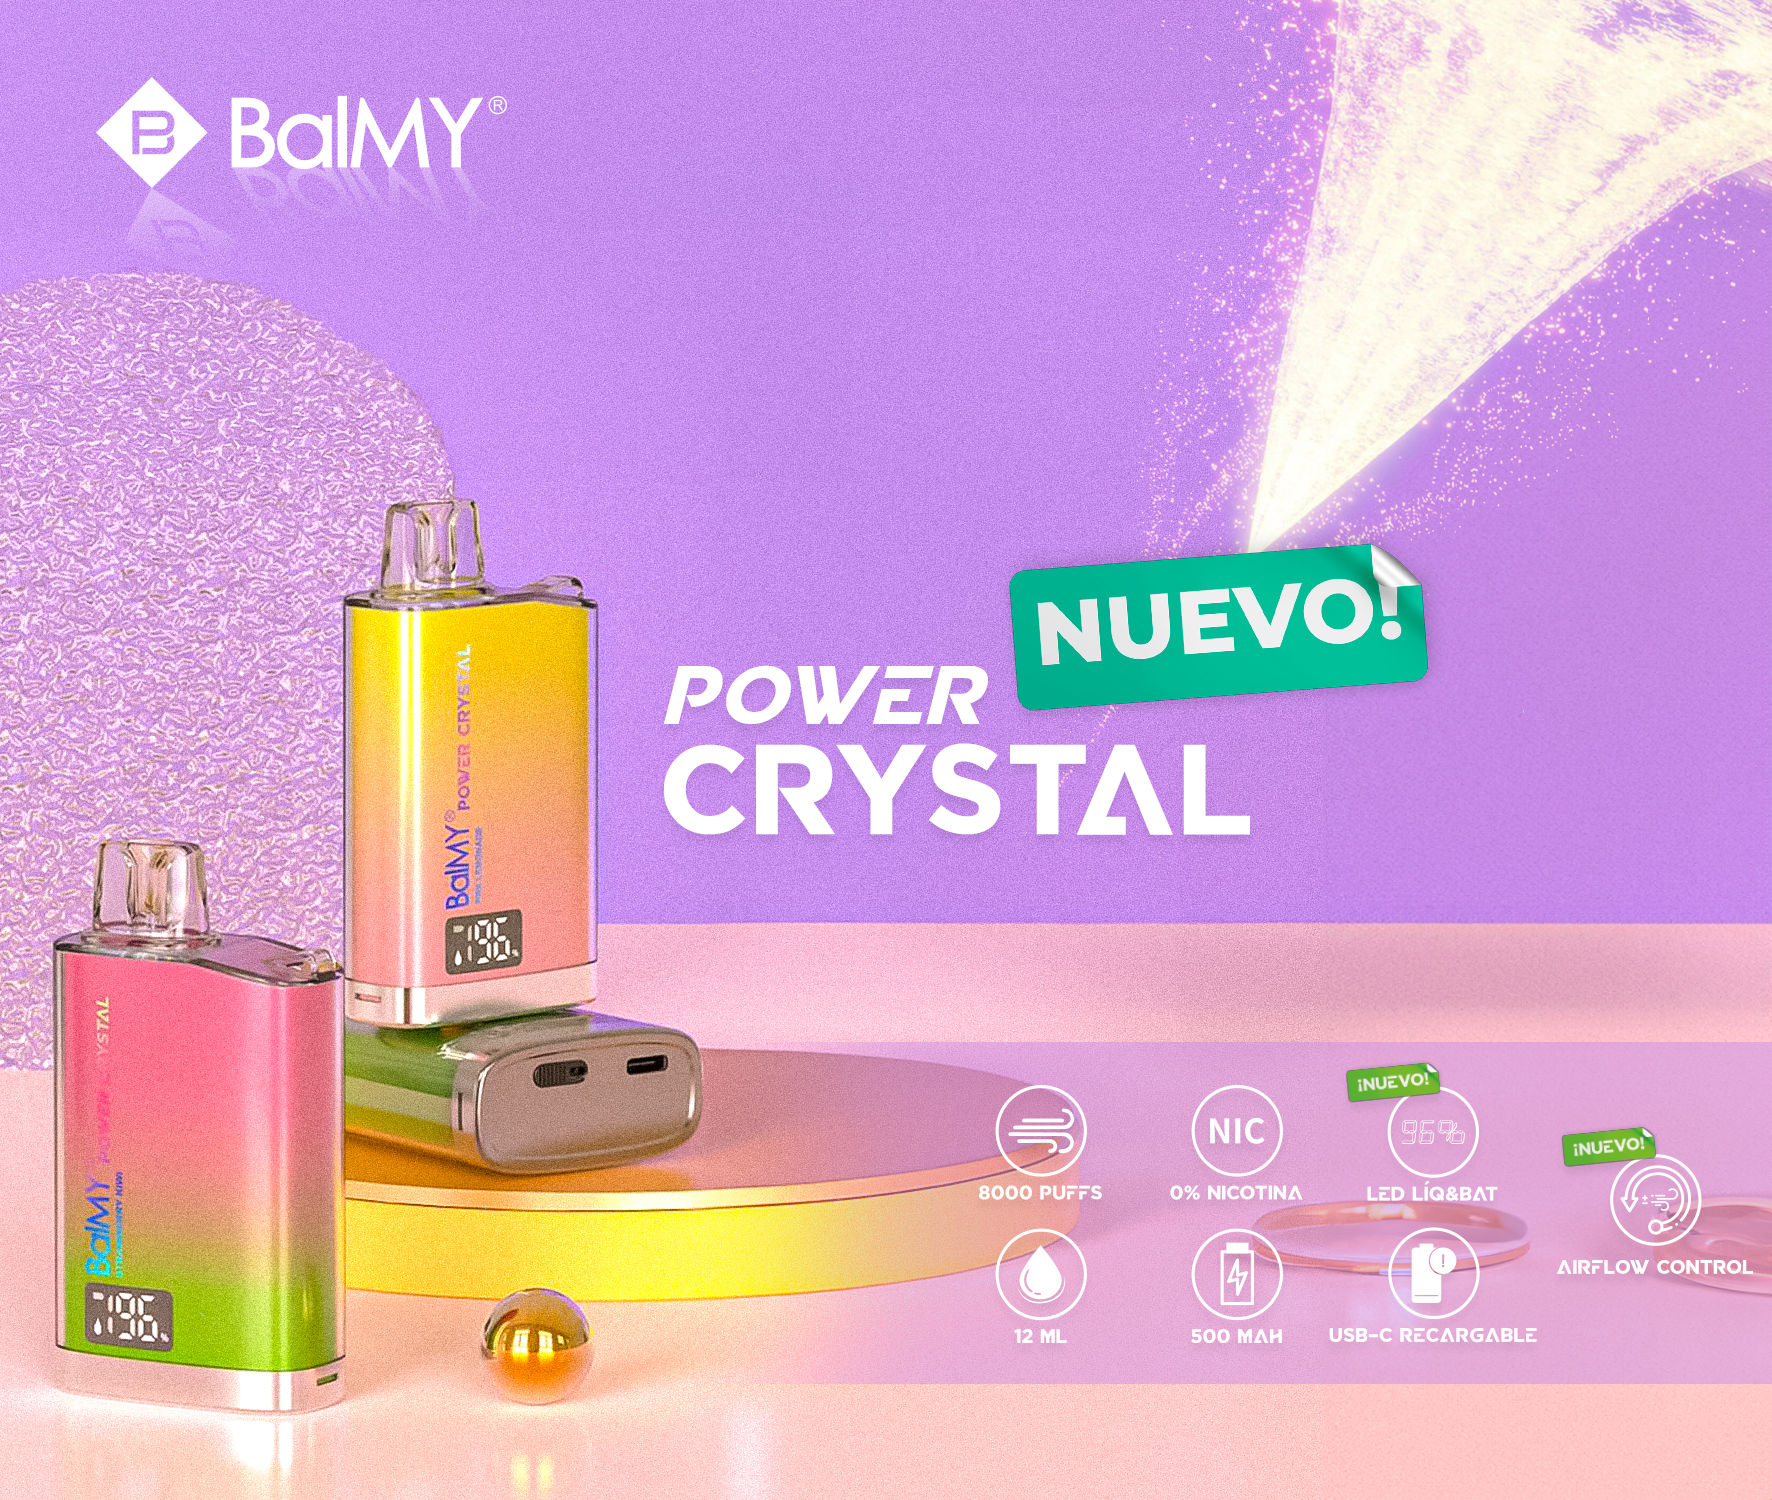 BalMY Power Crystal